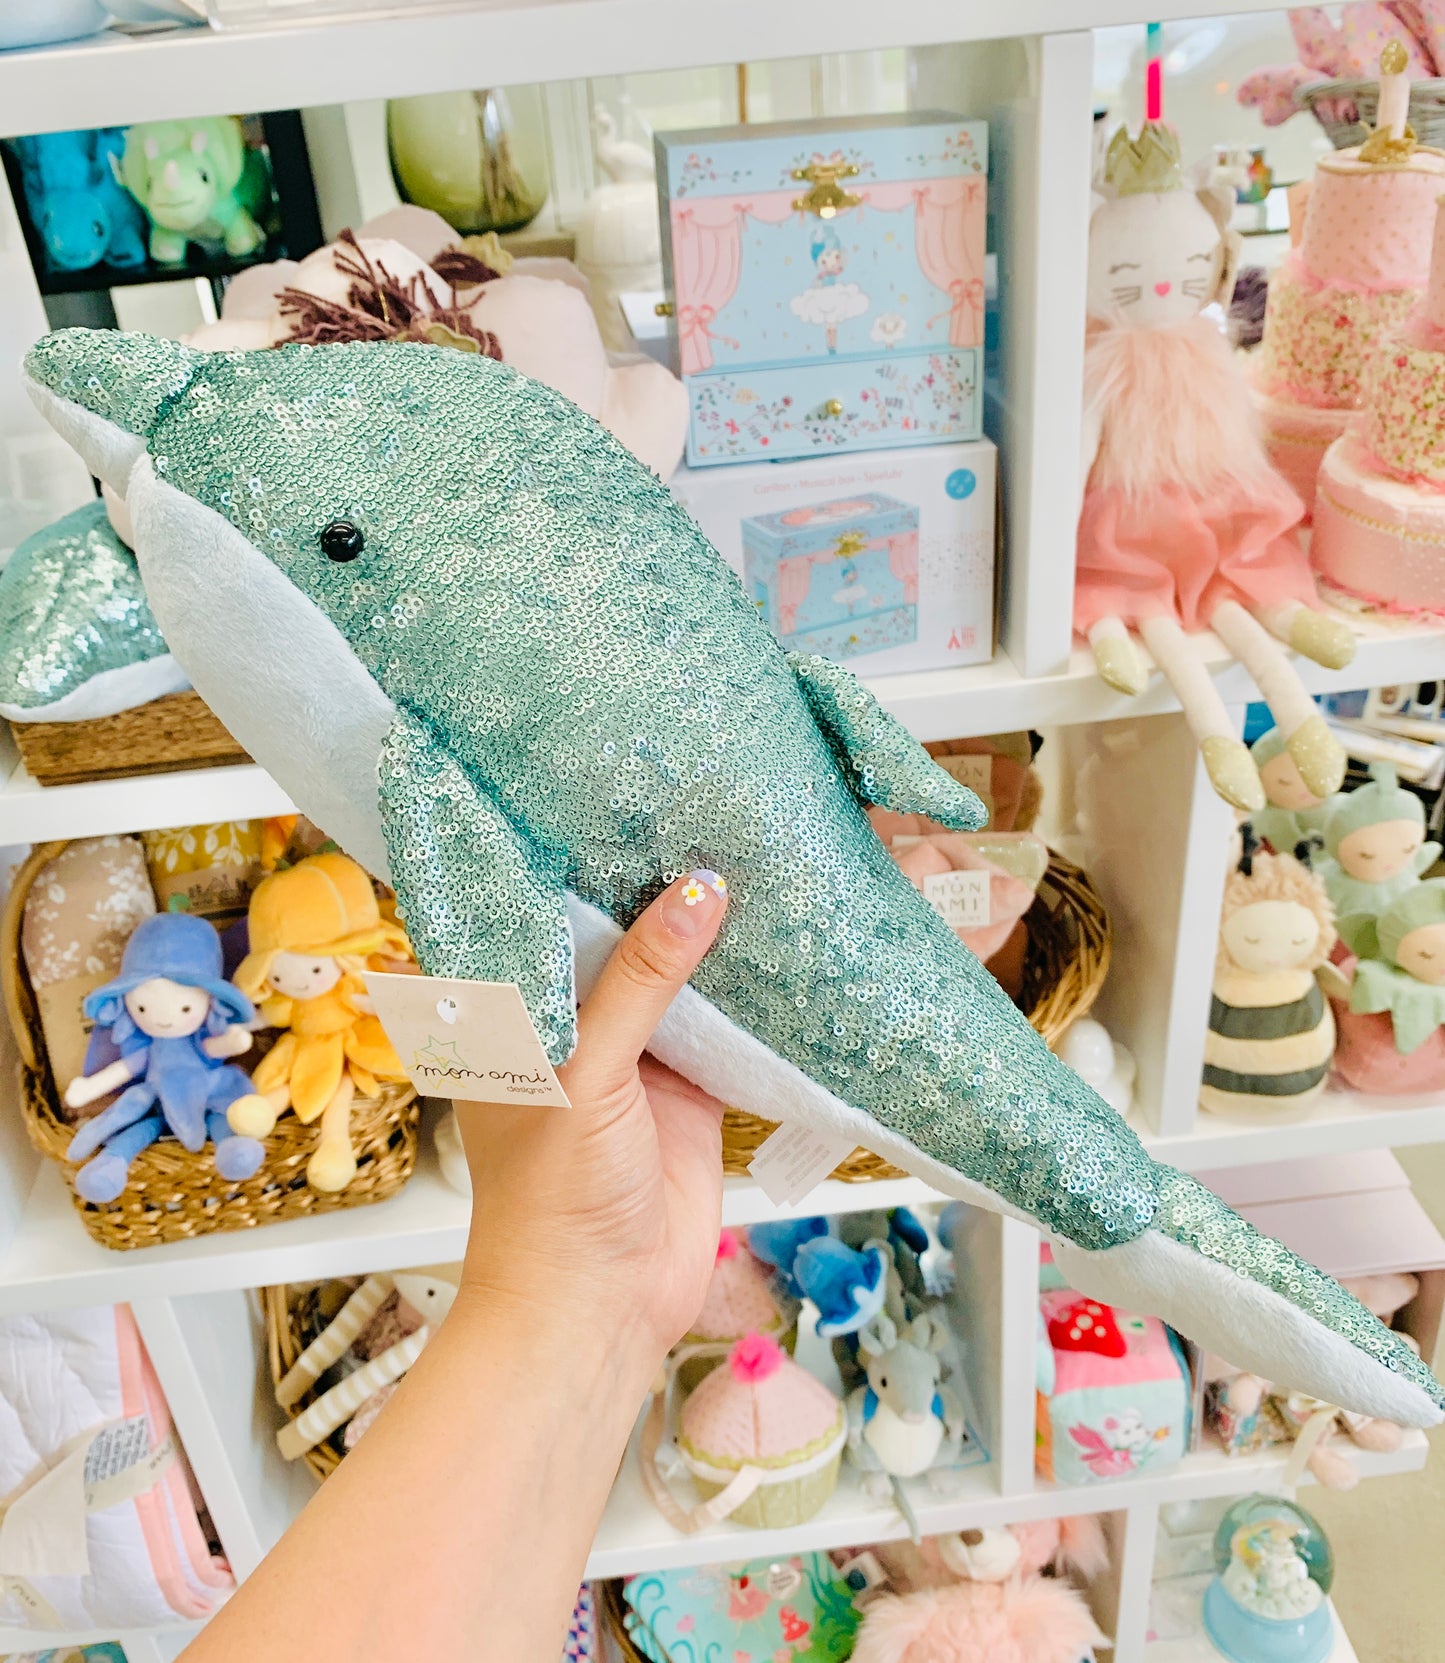 Mon Ami Sequin Dolphin Plush